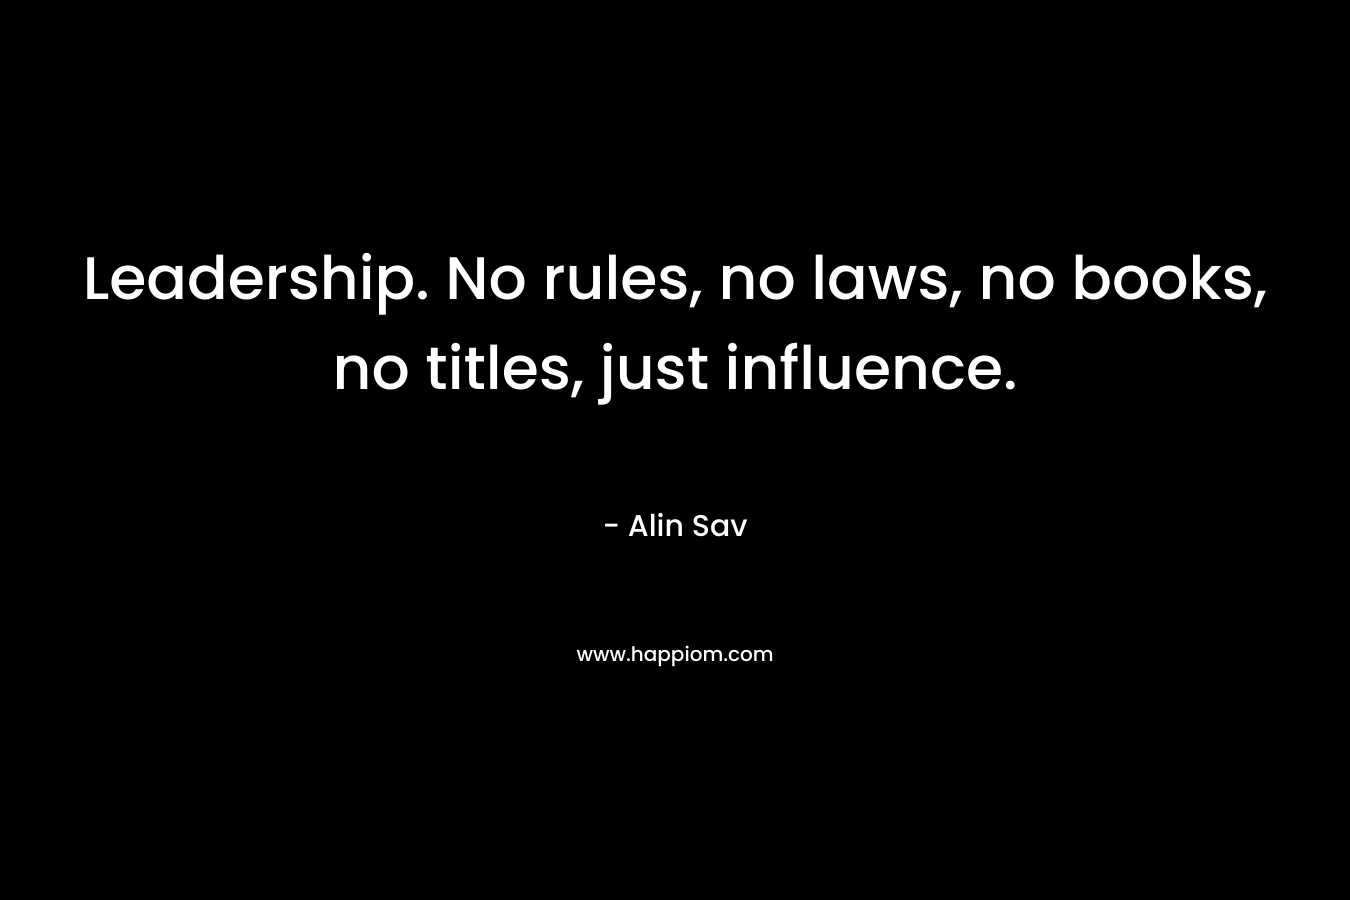 Leadership. No rules, no laws, no books, no titles, just influence.